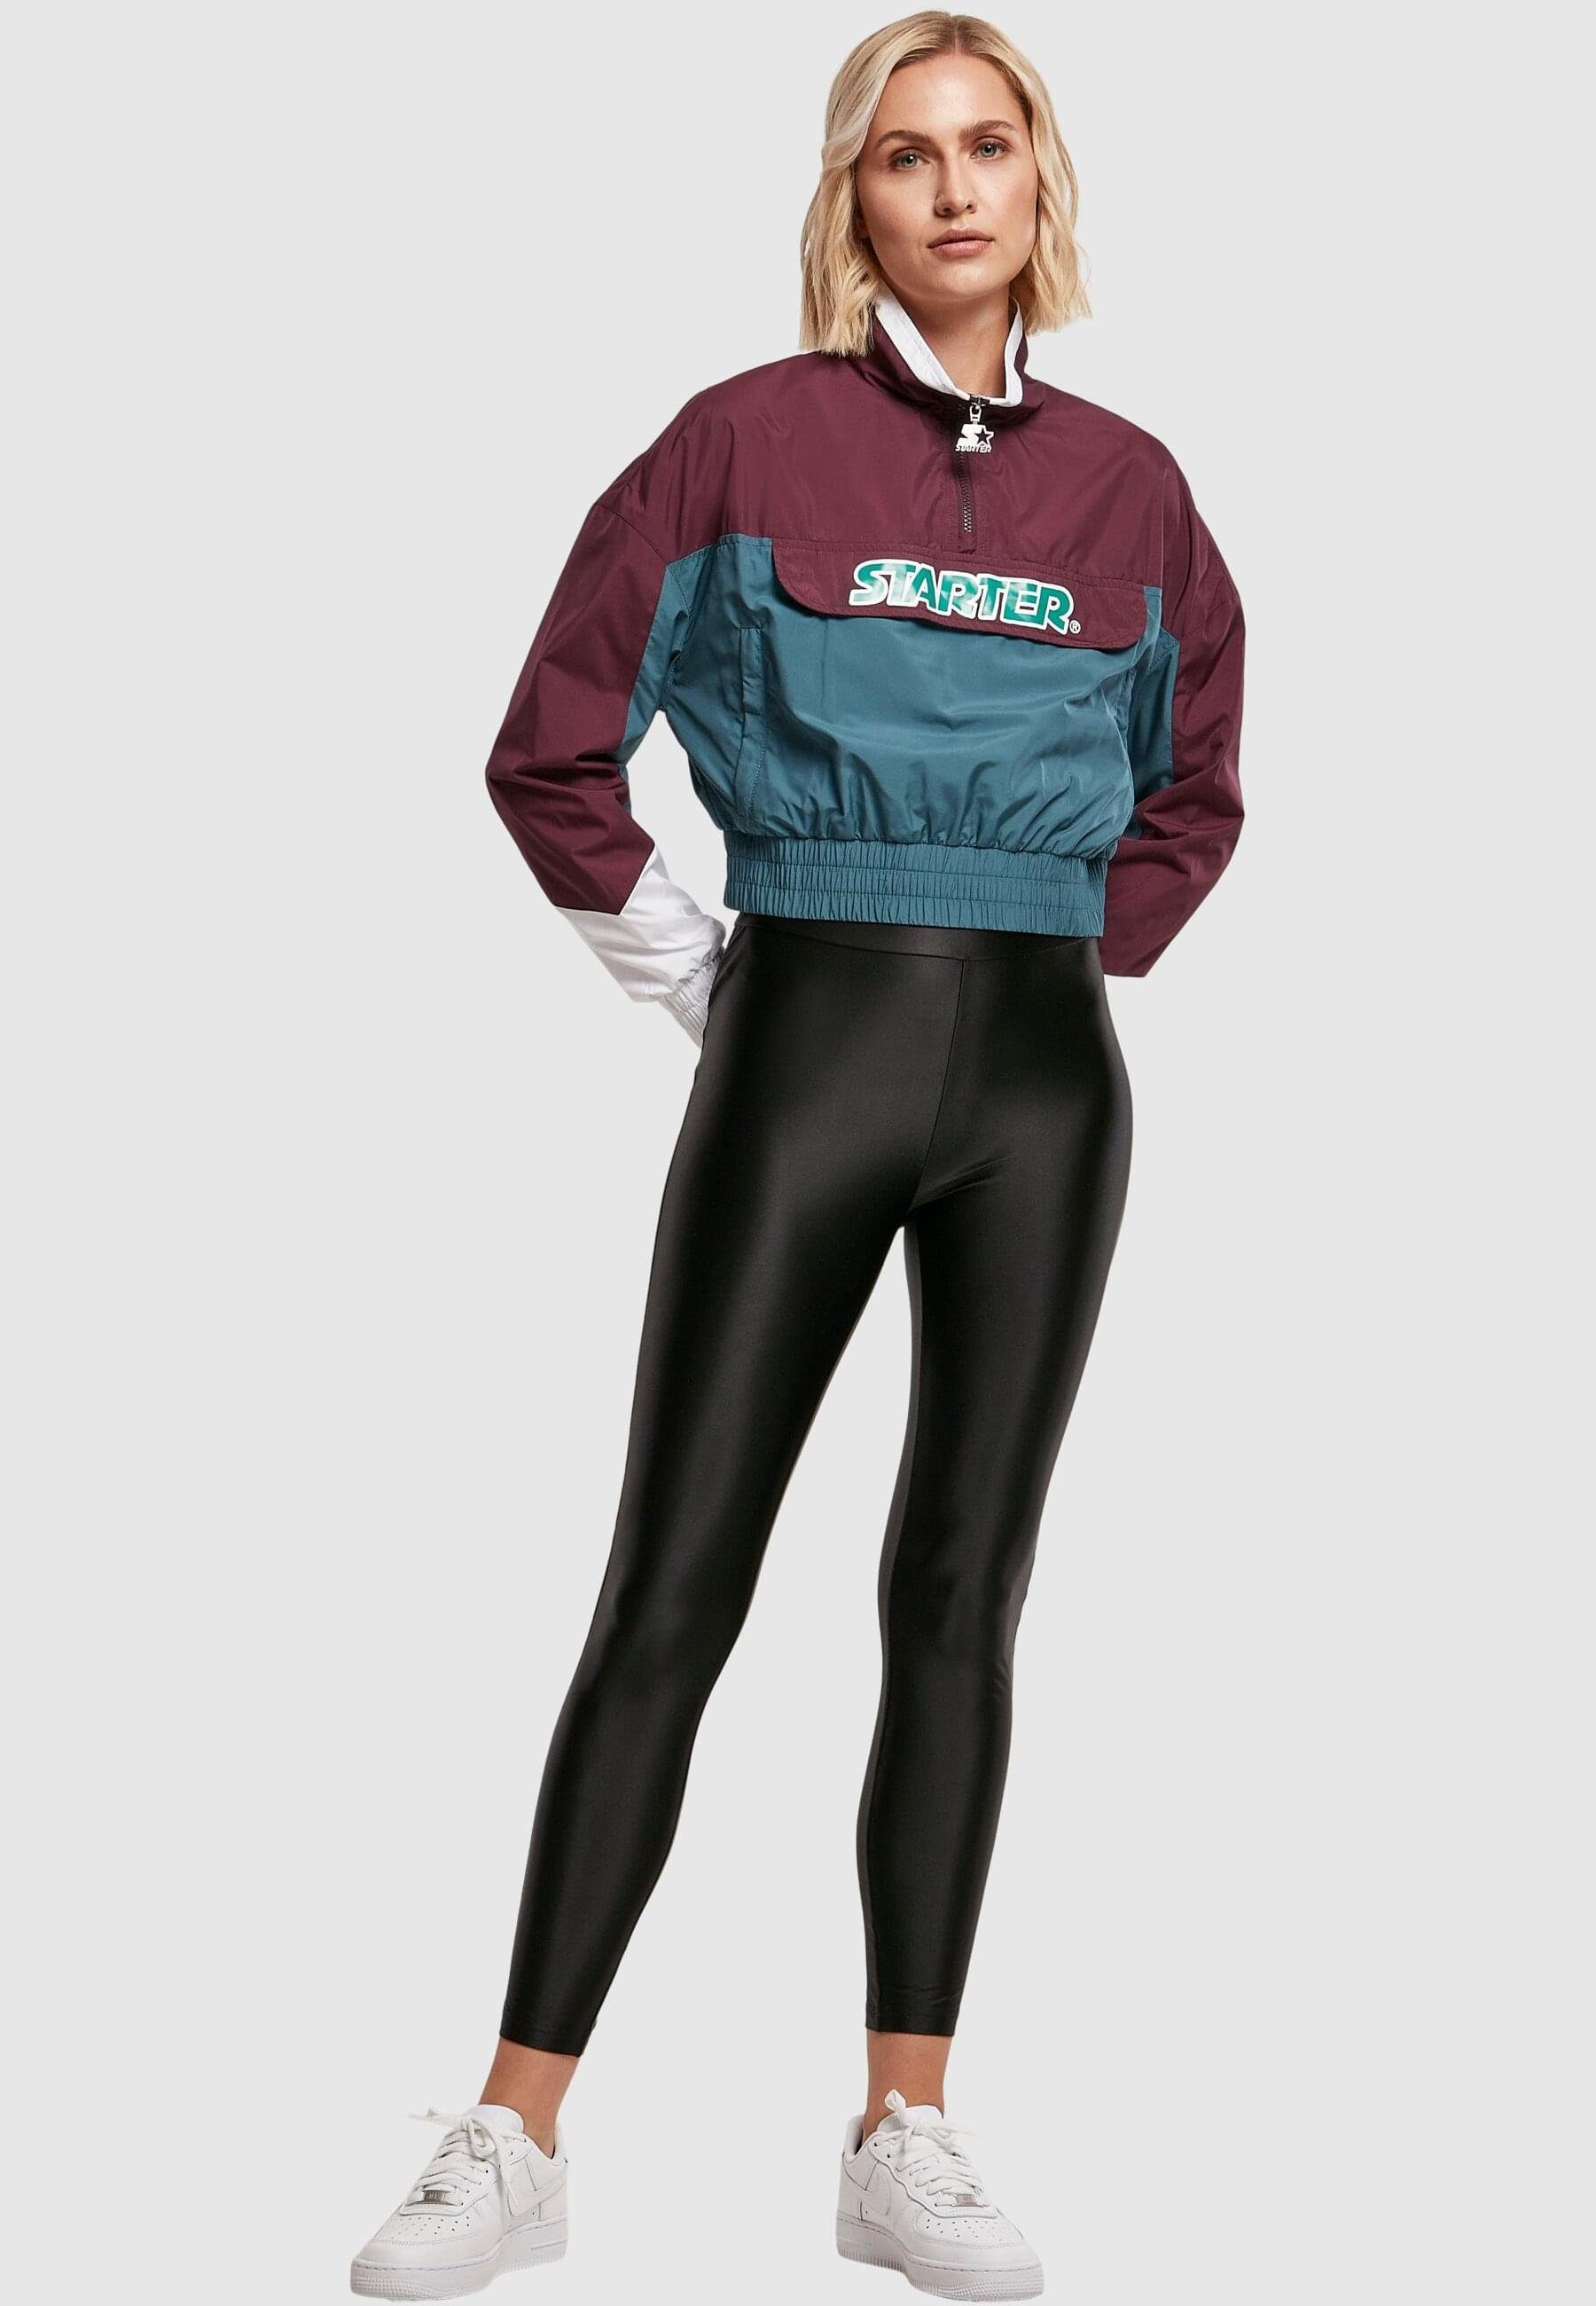 Over Label Outdoorjacke (1-St) Black Starter Starter Ladies Colorblock Damen Pull darkviolet/teal Jacket